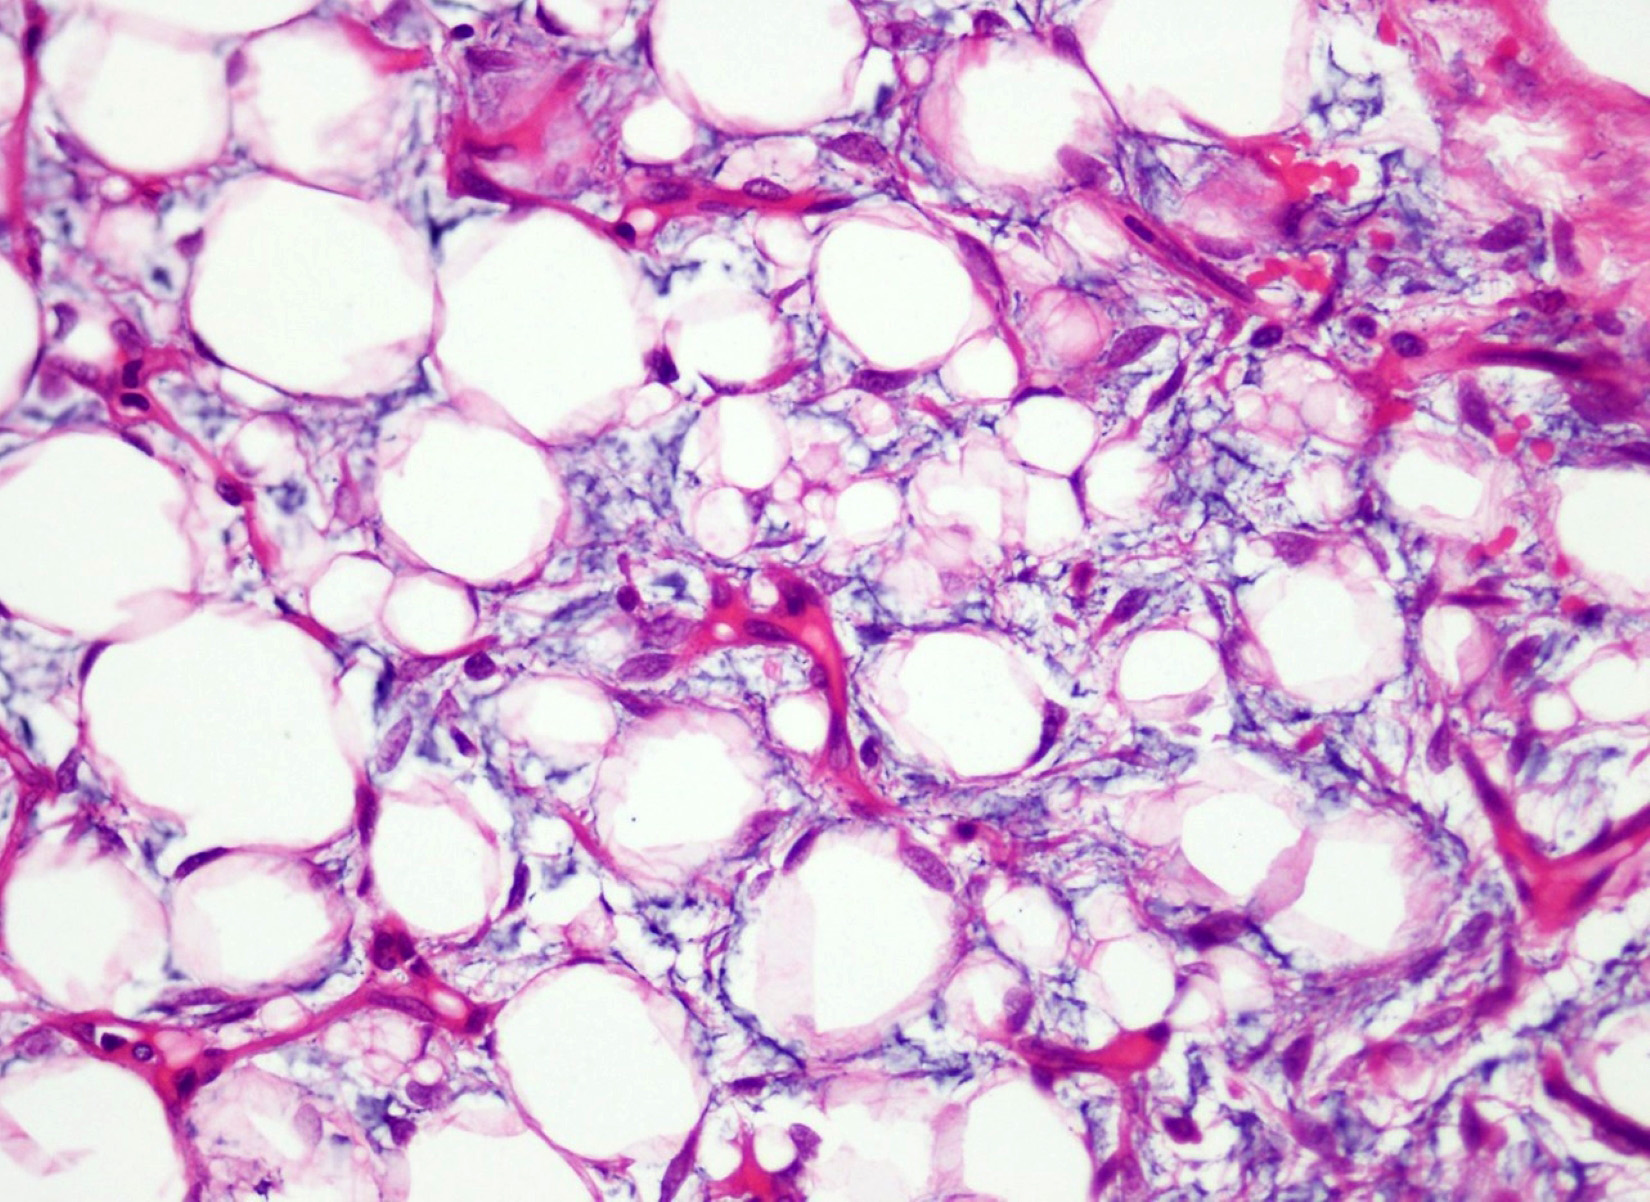 Lipoblasts and mesenchymal cells